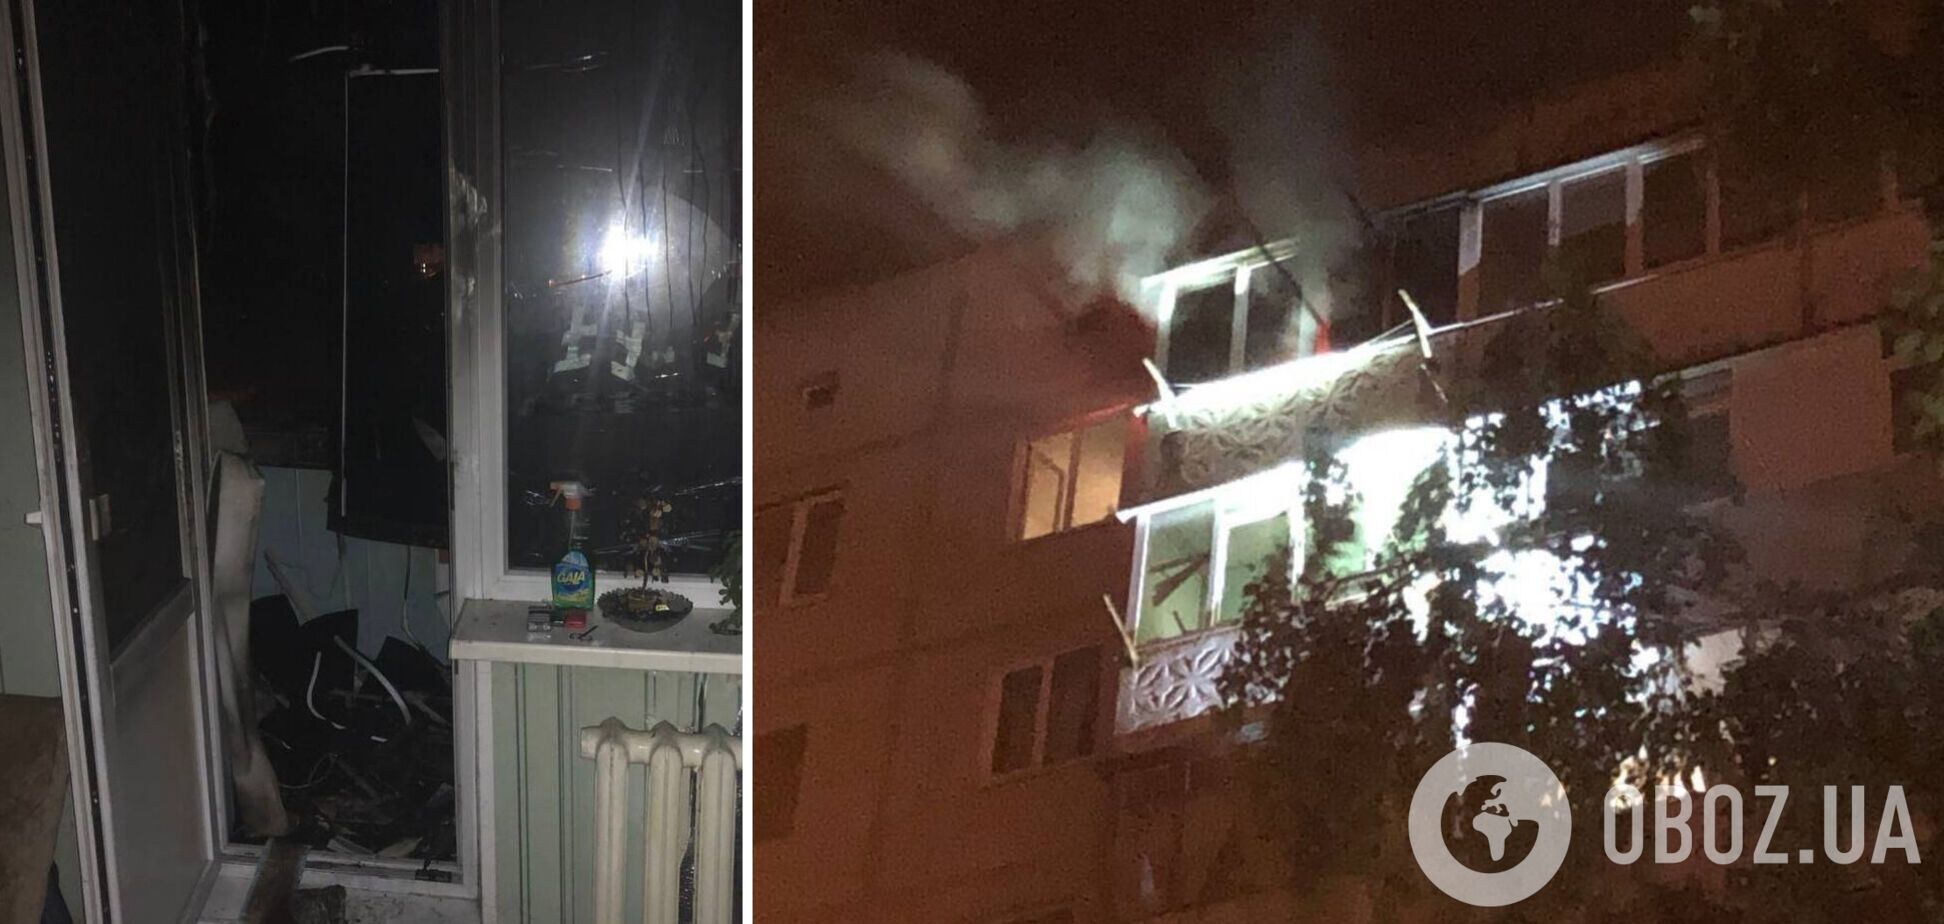 Пожар произошел на балконе в квартире многоэтажки